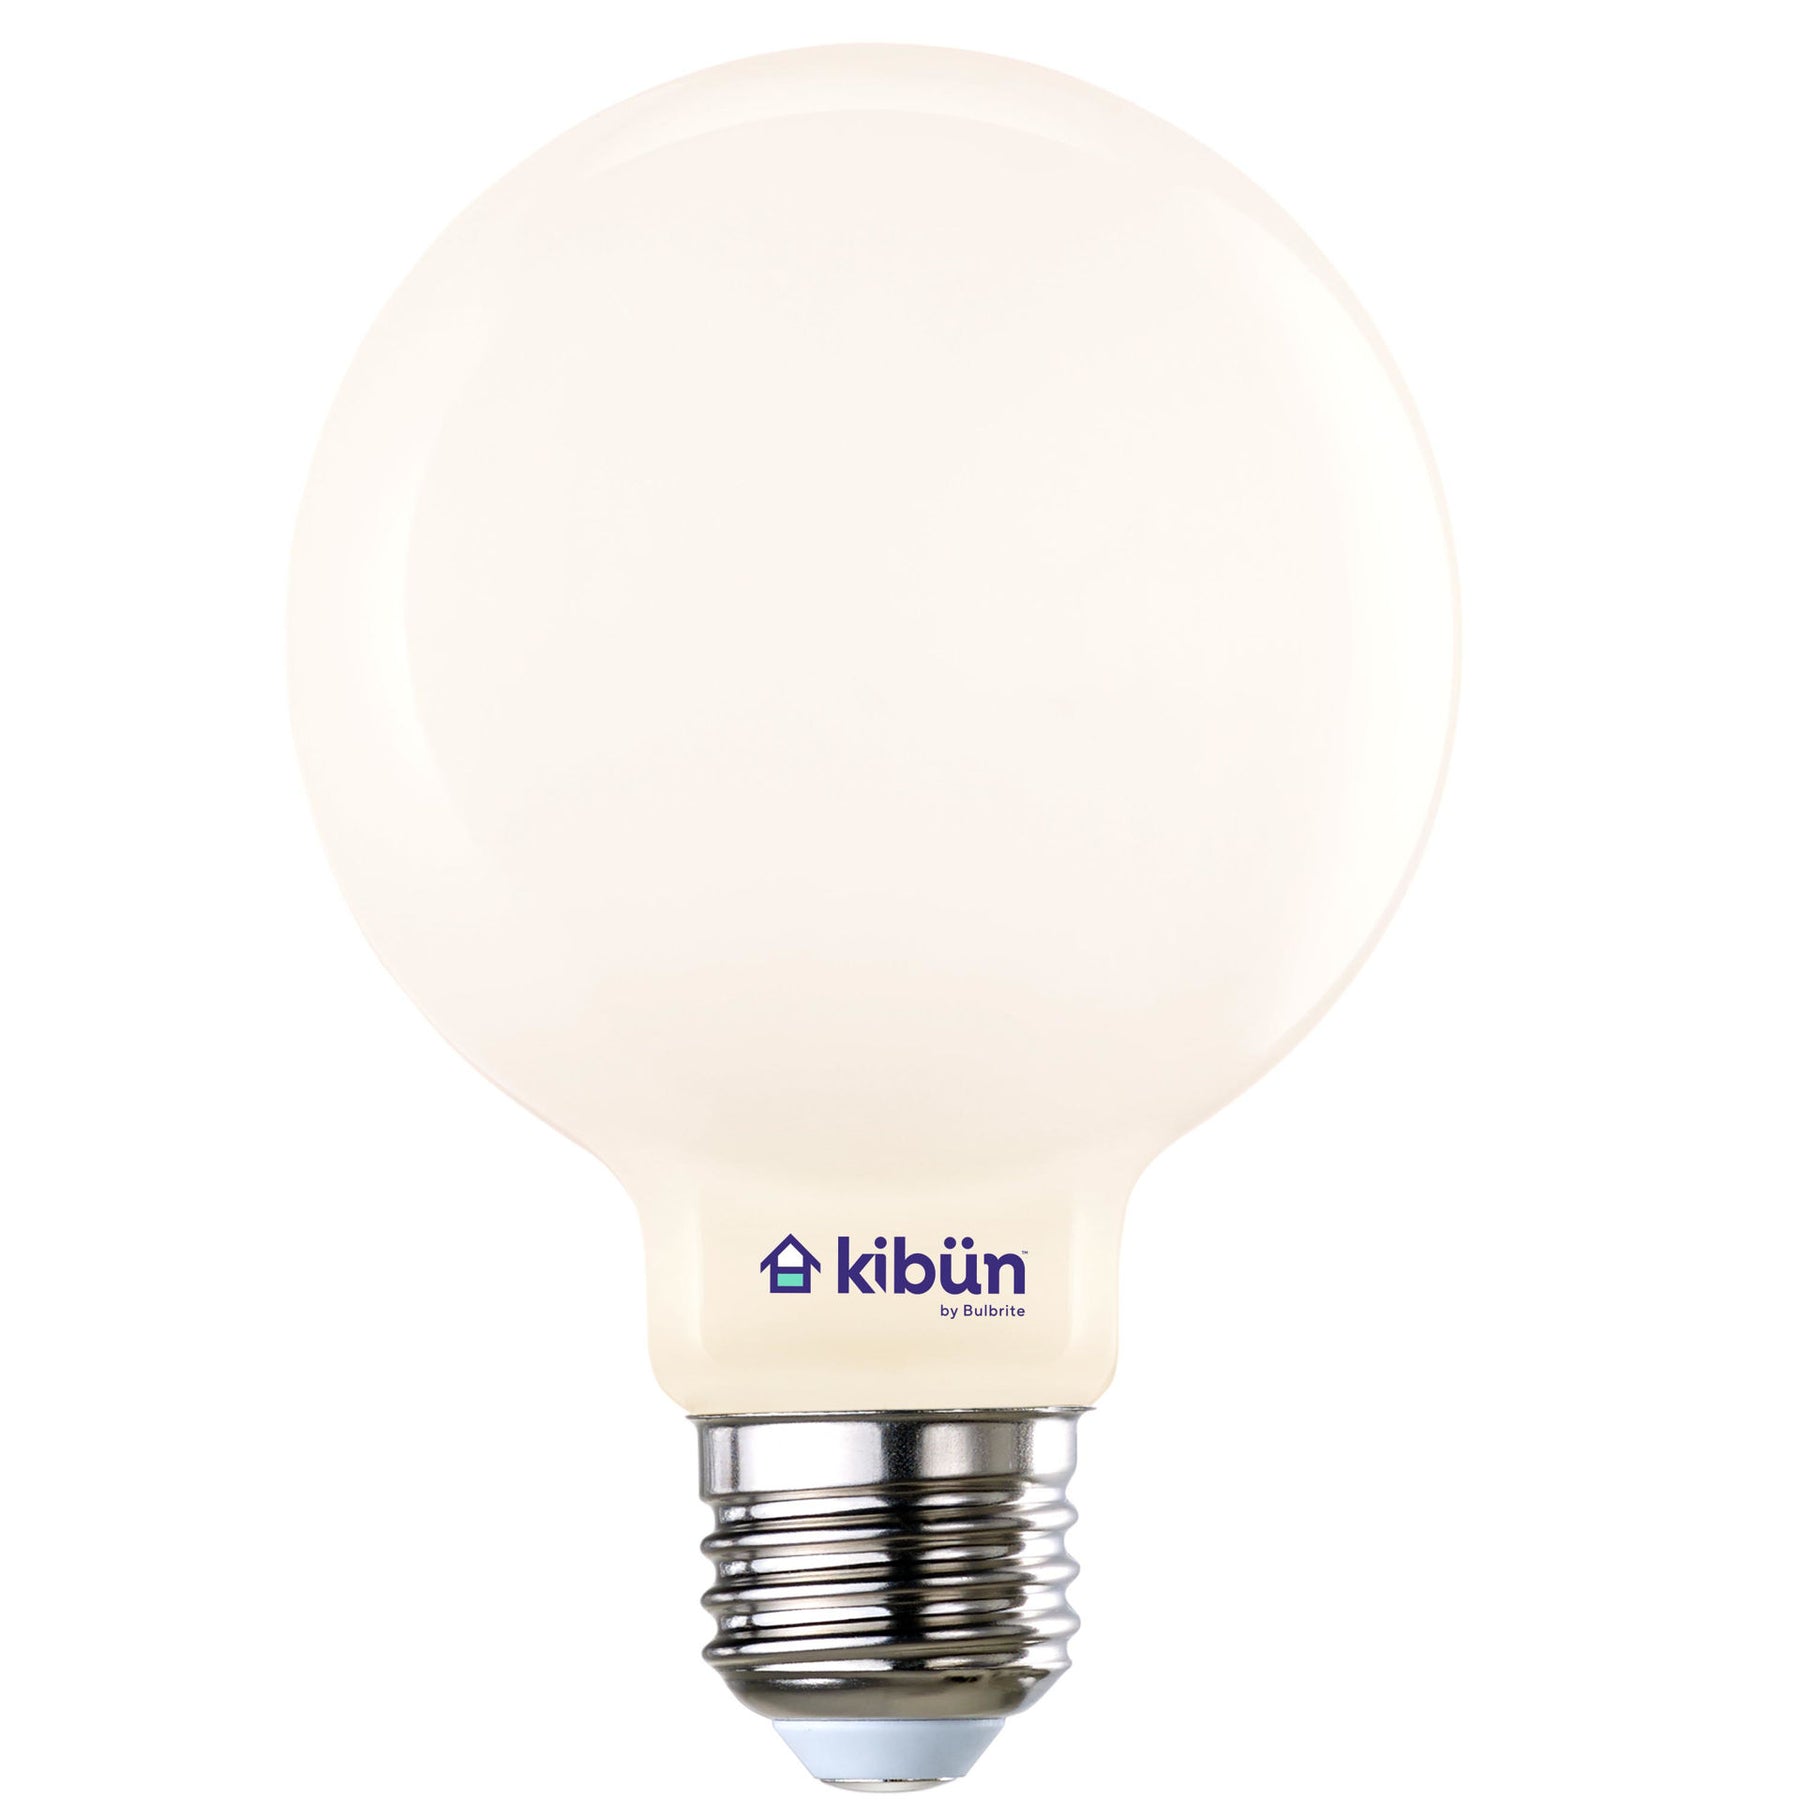 60W Equiv LED - Globe - Soft White (4-Pack)